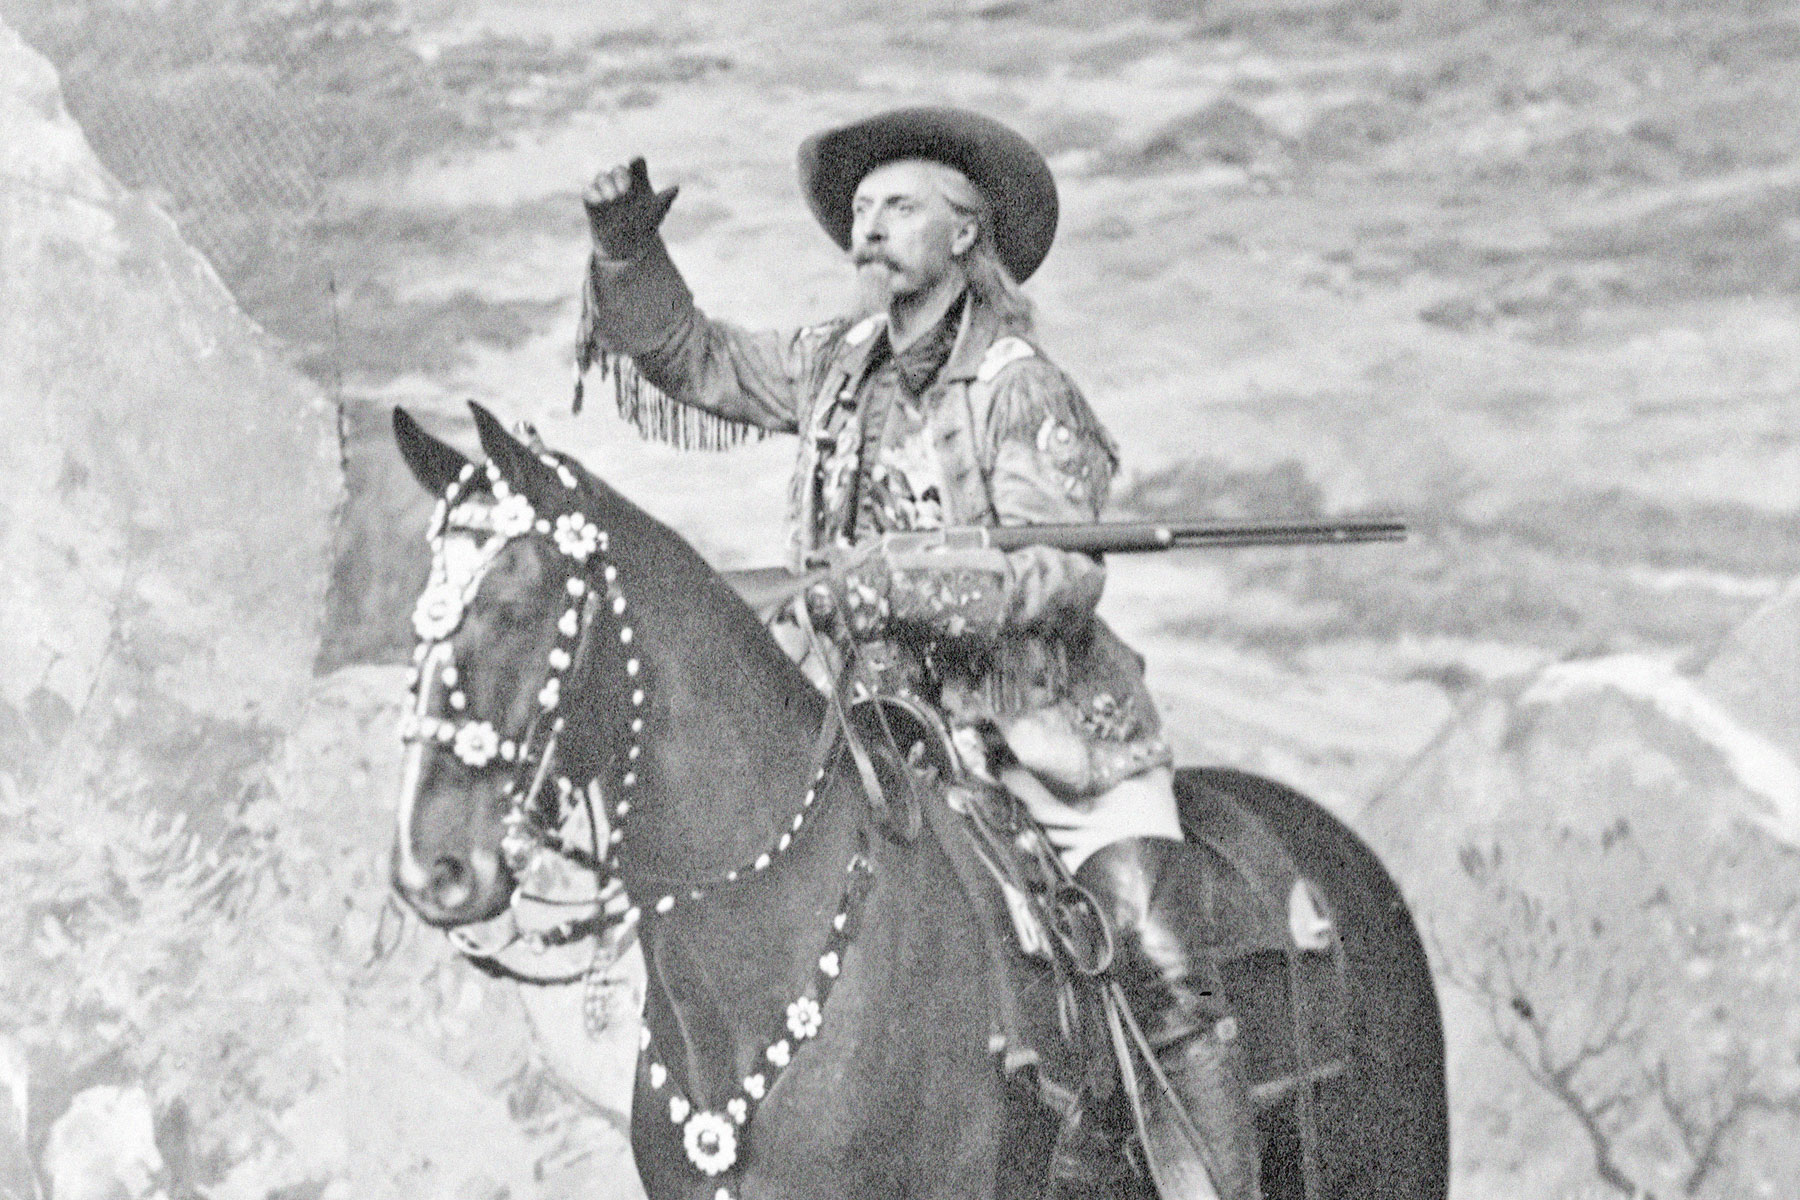 Buffalo Bill on horseback